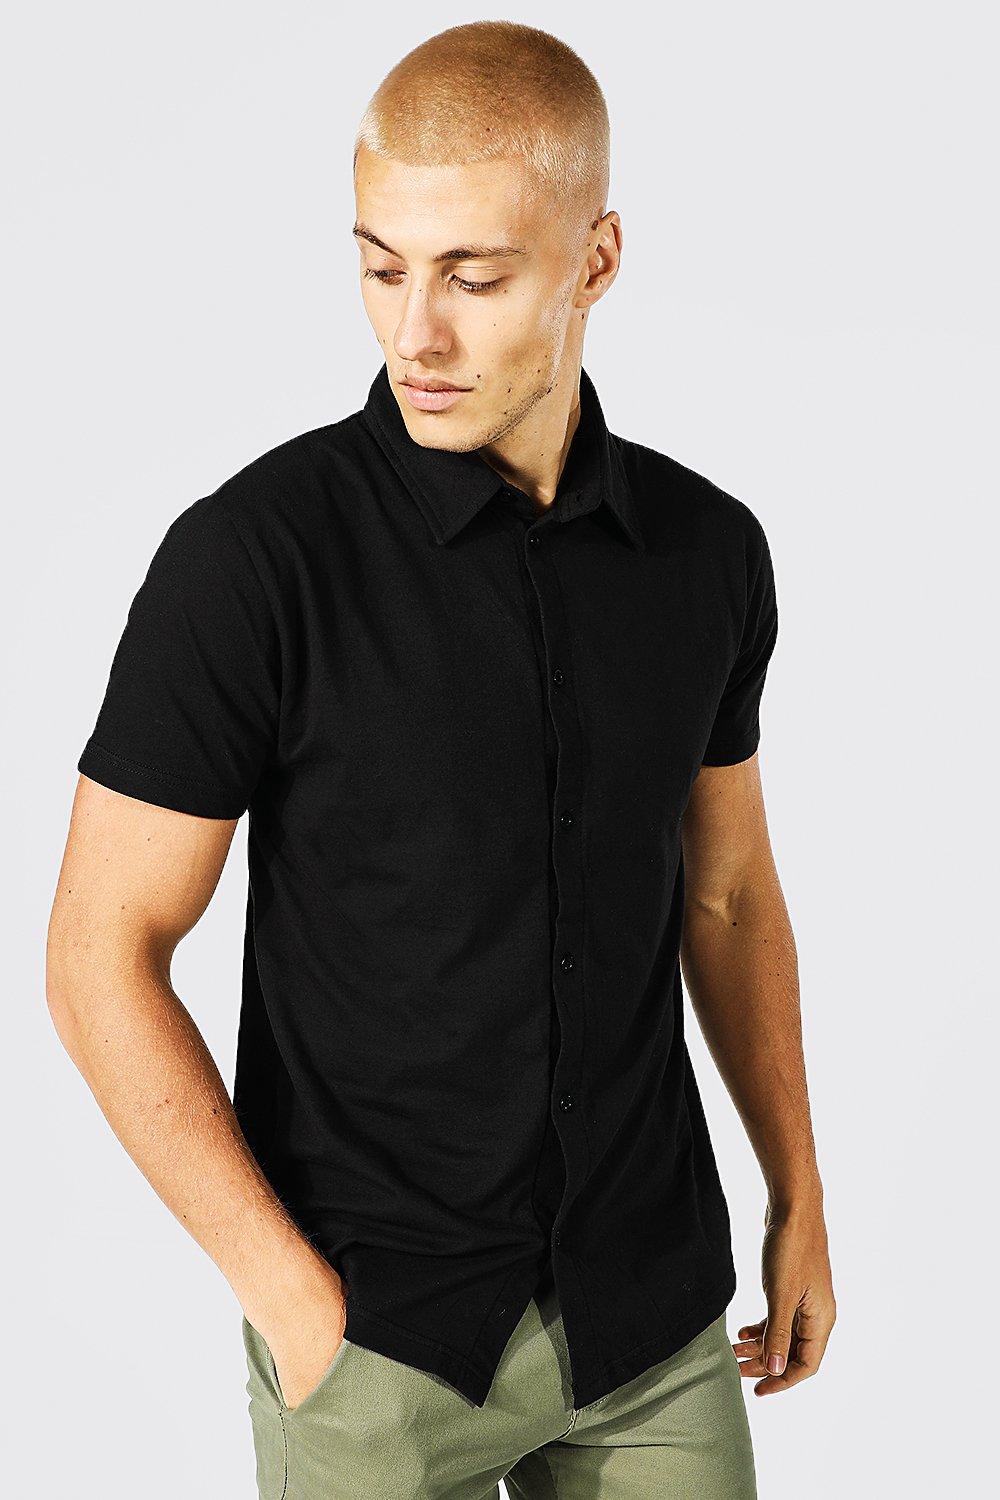 Black Shirts For Men  Black Dress & Button Down Shirts